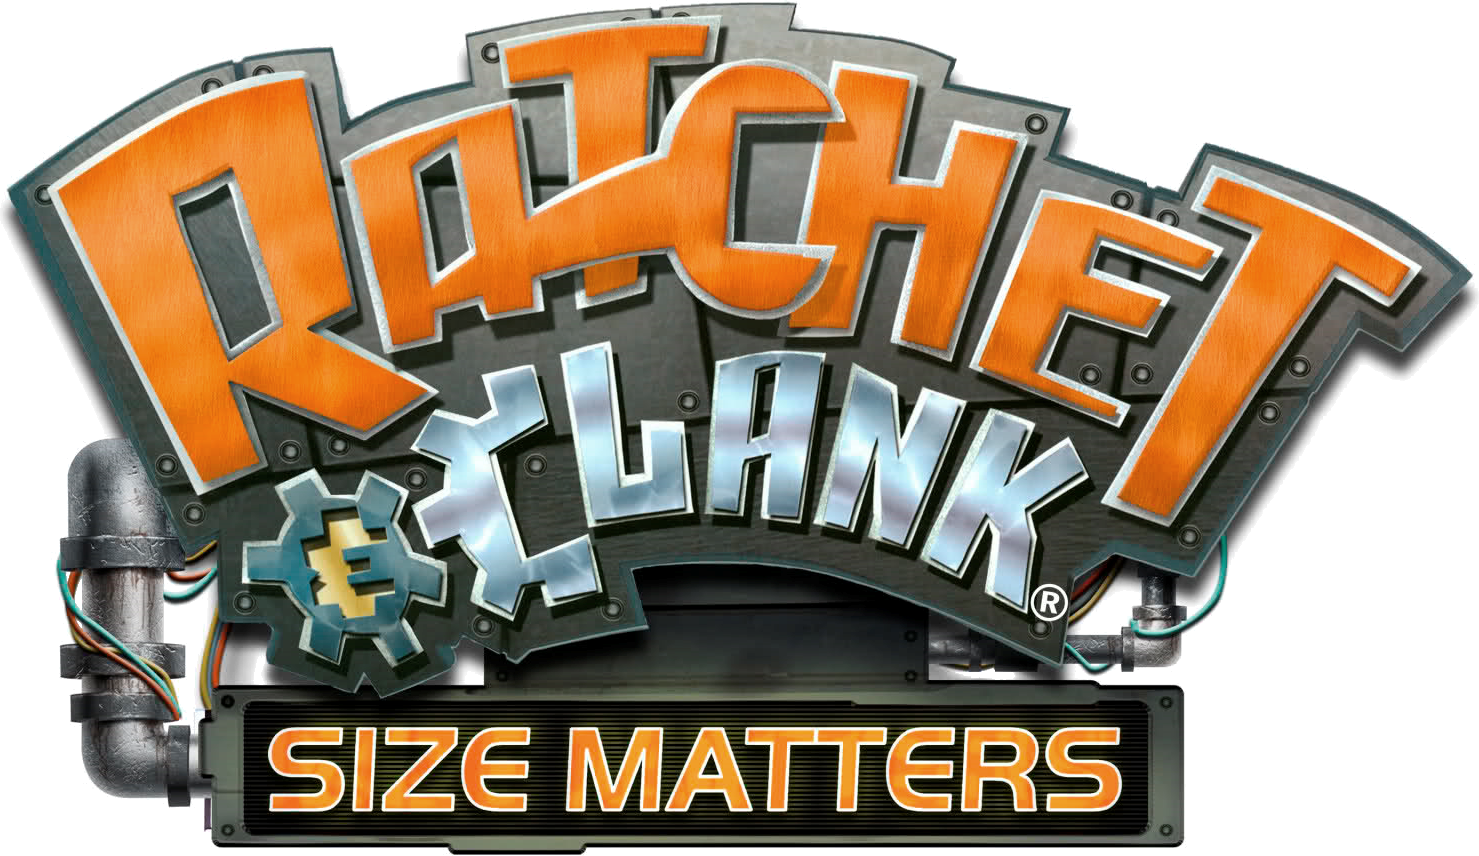 Ratchet & Clank: Size Matters - PSP - Ratchet Galaxy